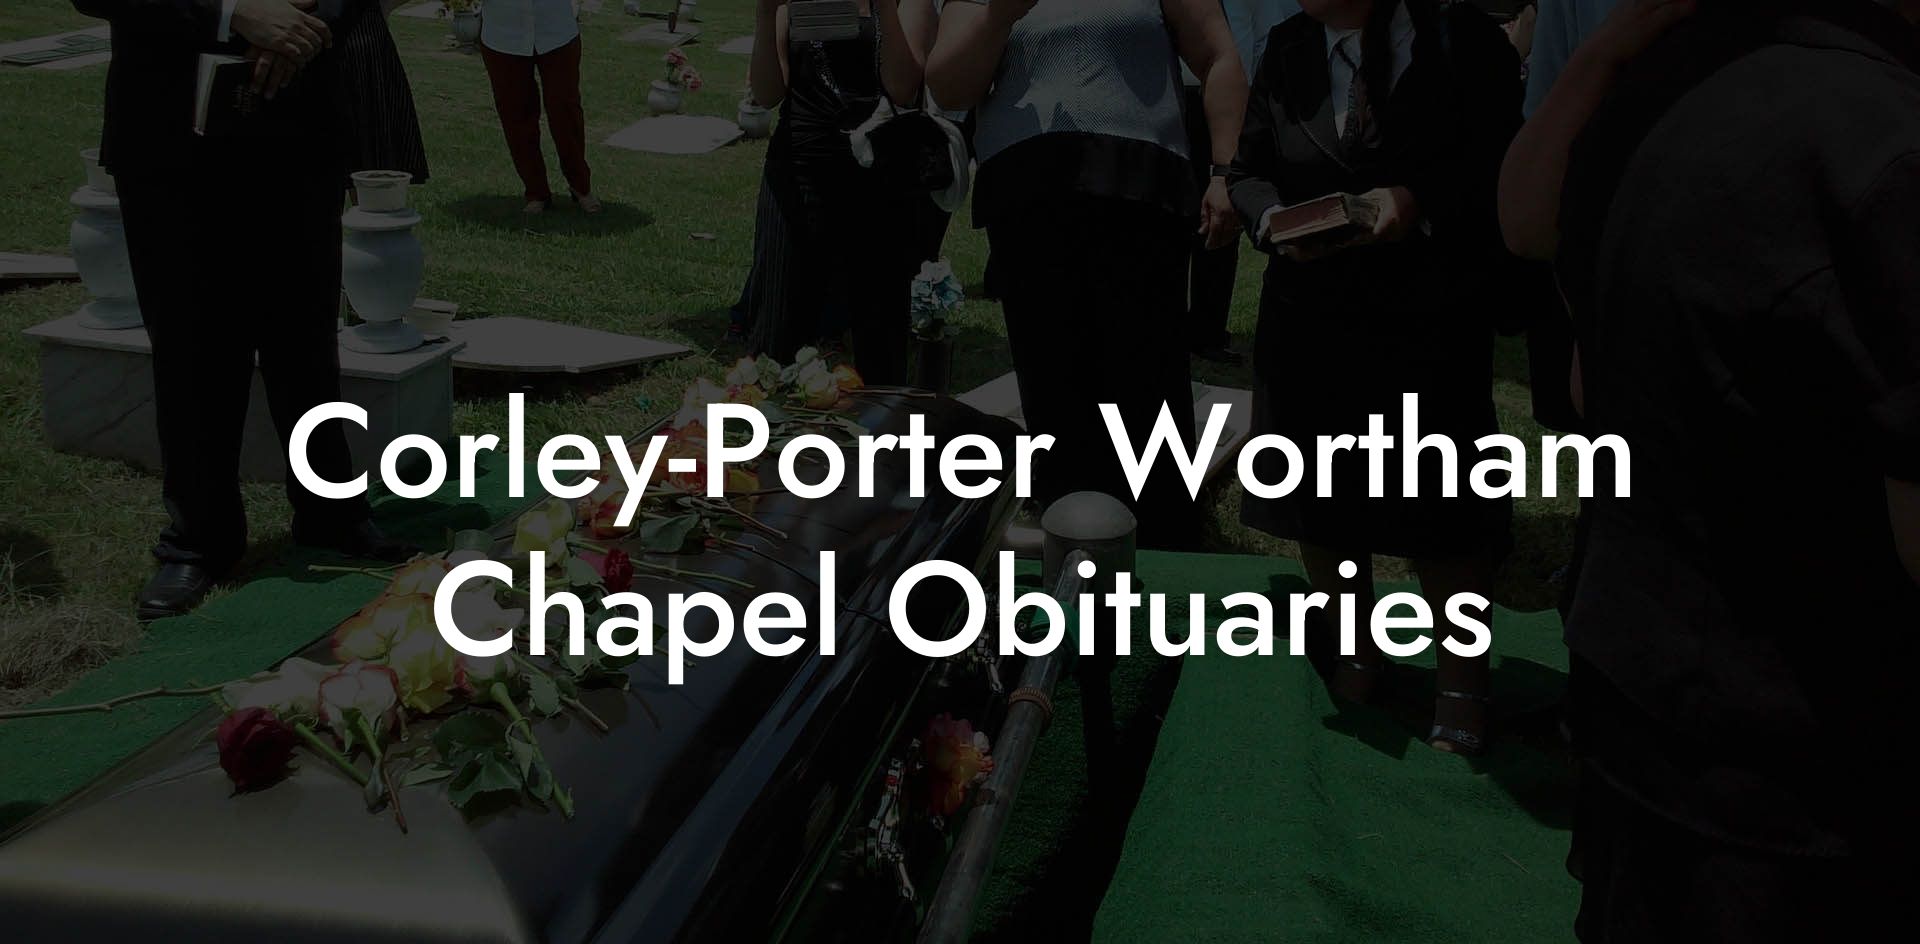 Corley-Porter Wortham Chapel Obituaries